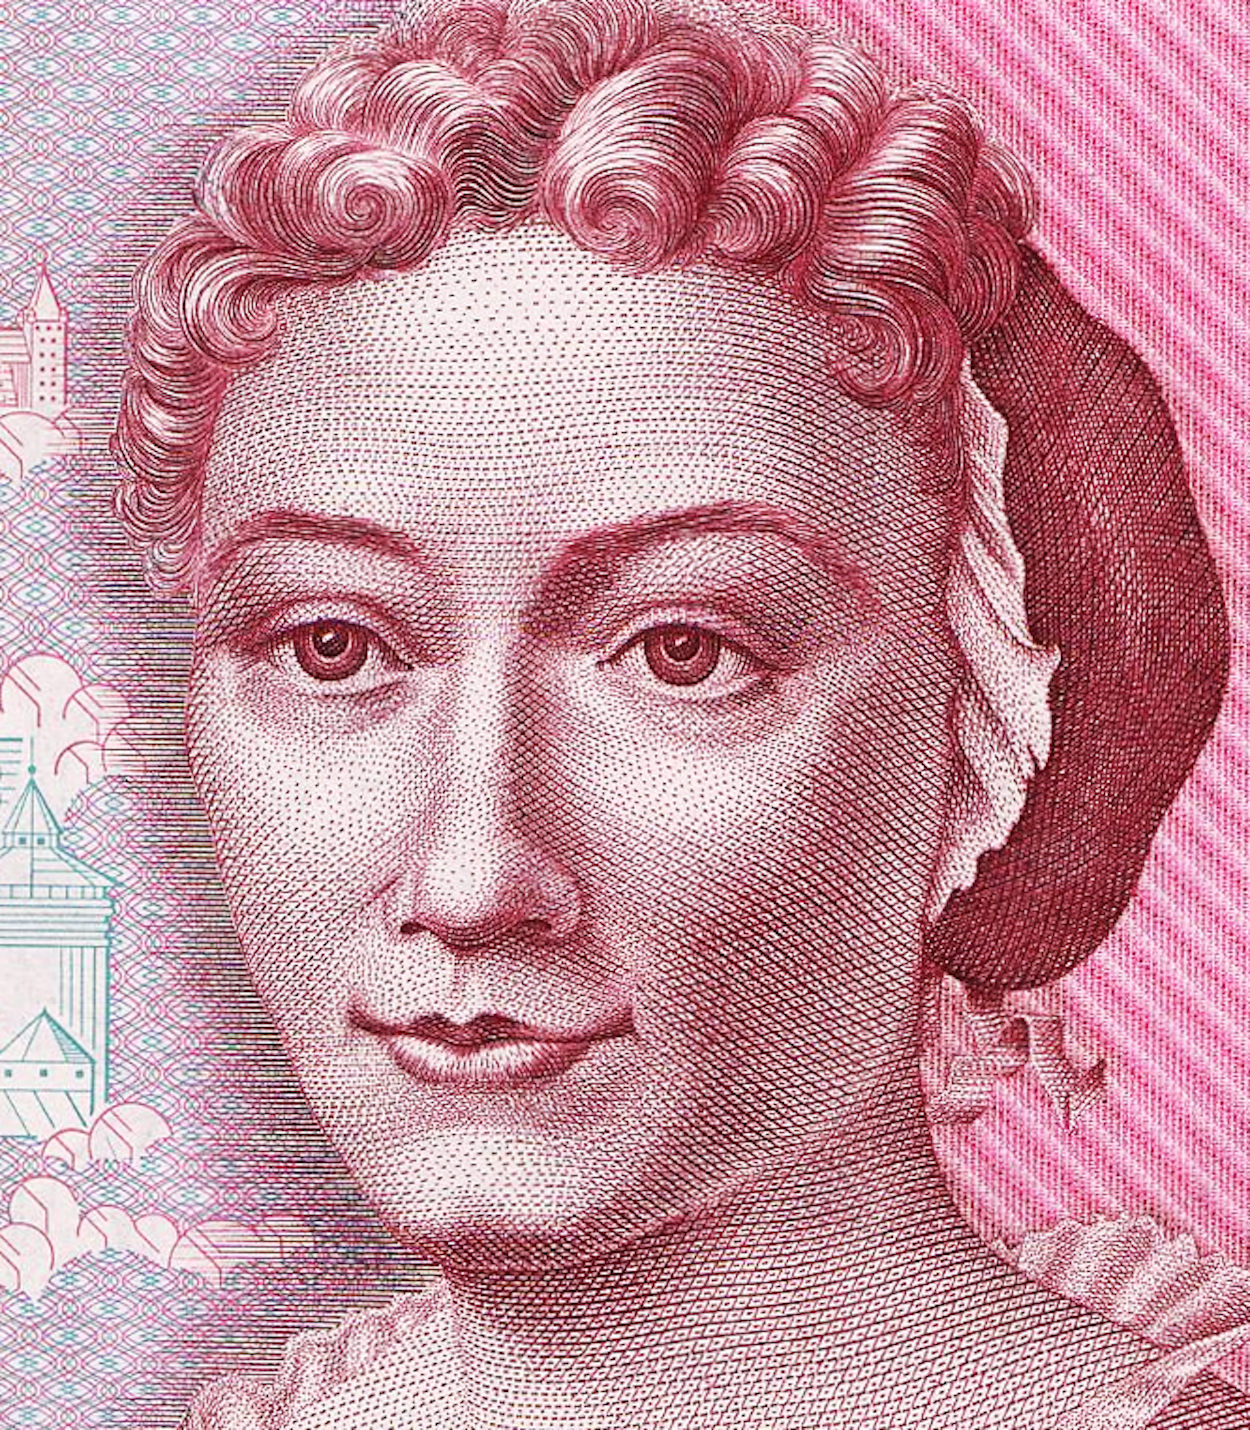 Maria Sibylla Merian - 2. April 1647 - 13. Januar 1717